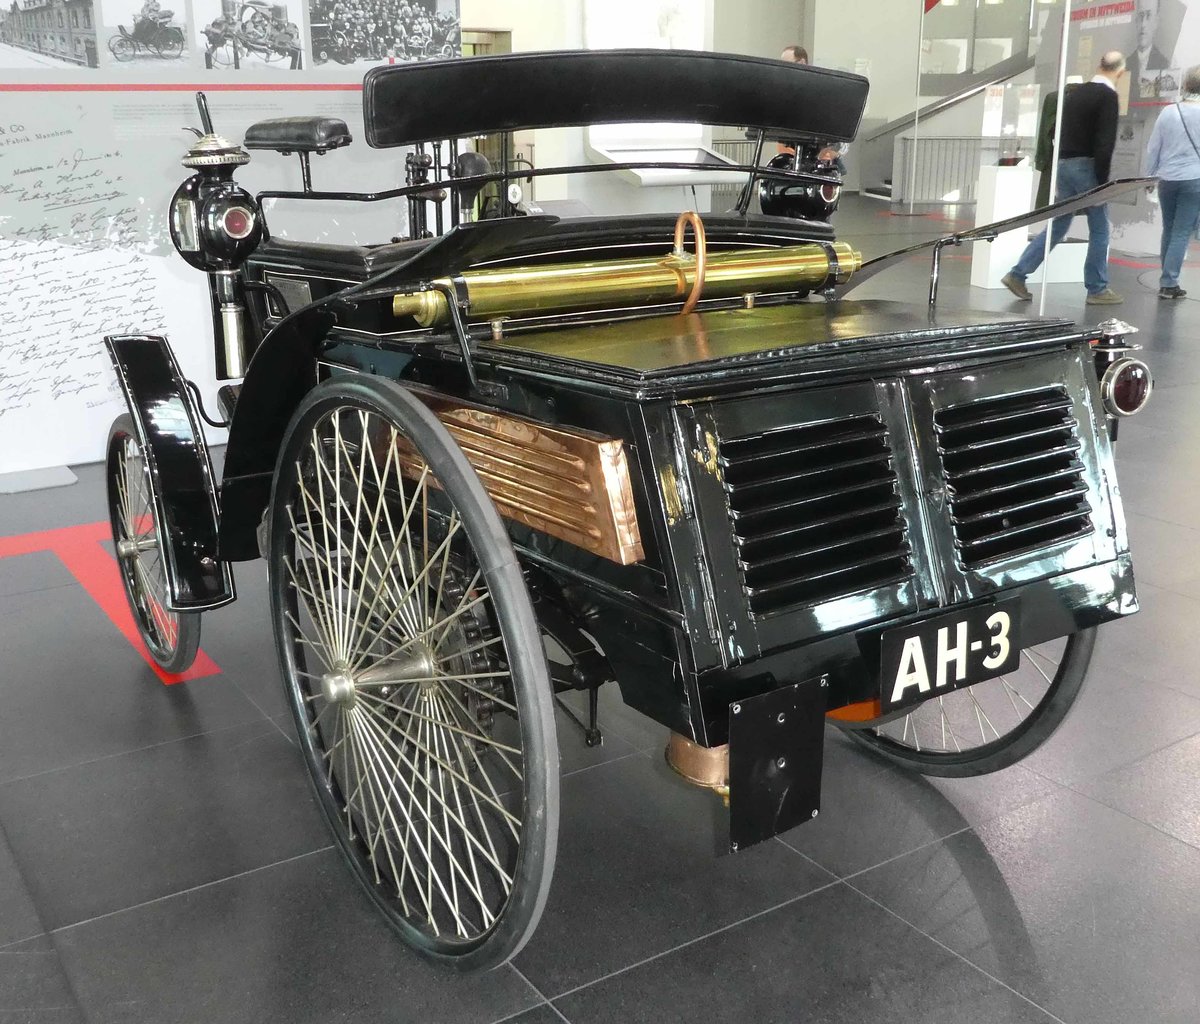 =Benz Velo, Bj. 1898, 1 Zyl. 4-takt, 1045 ccm, 1,5 später 3,5 PS, ausgestellt im Audi-Museum Ingolstadt im April 2019. 